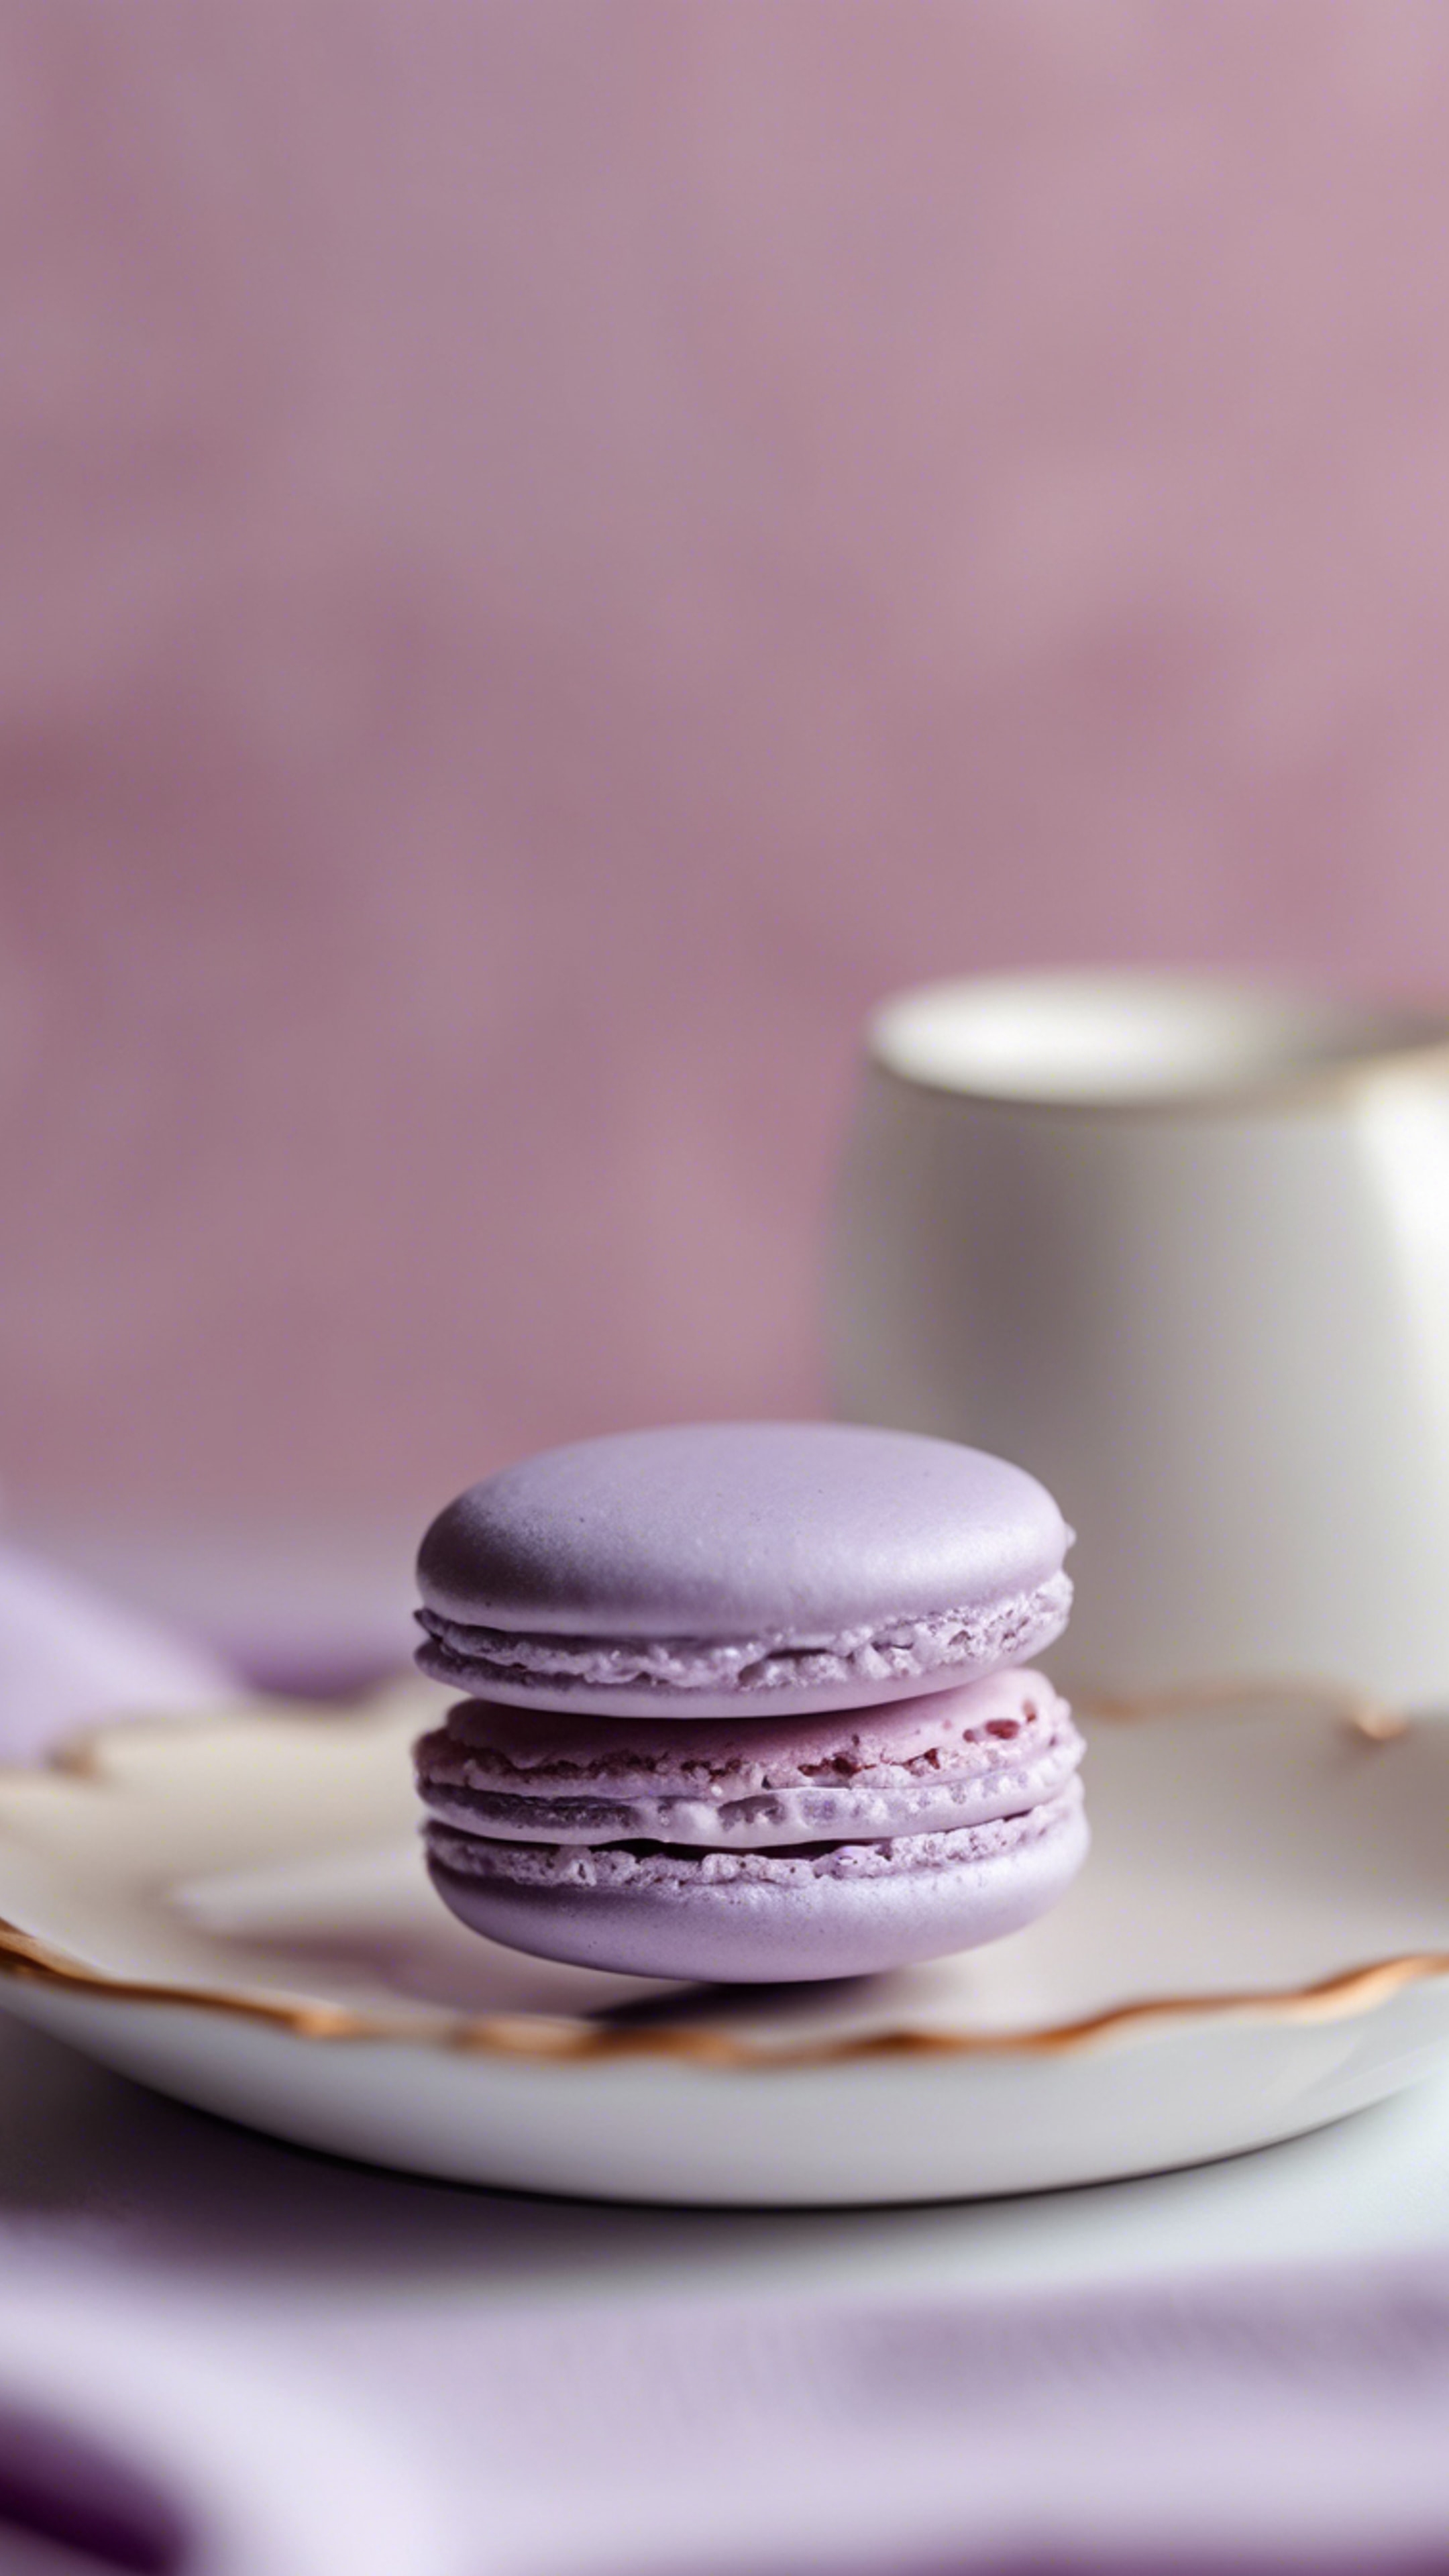 A close-up of a pastel purple-hued french macaron on a white porcelain plate. Fond d'écran[867427dfb4584ec3b53c]